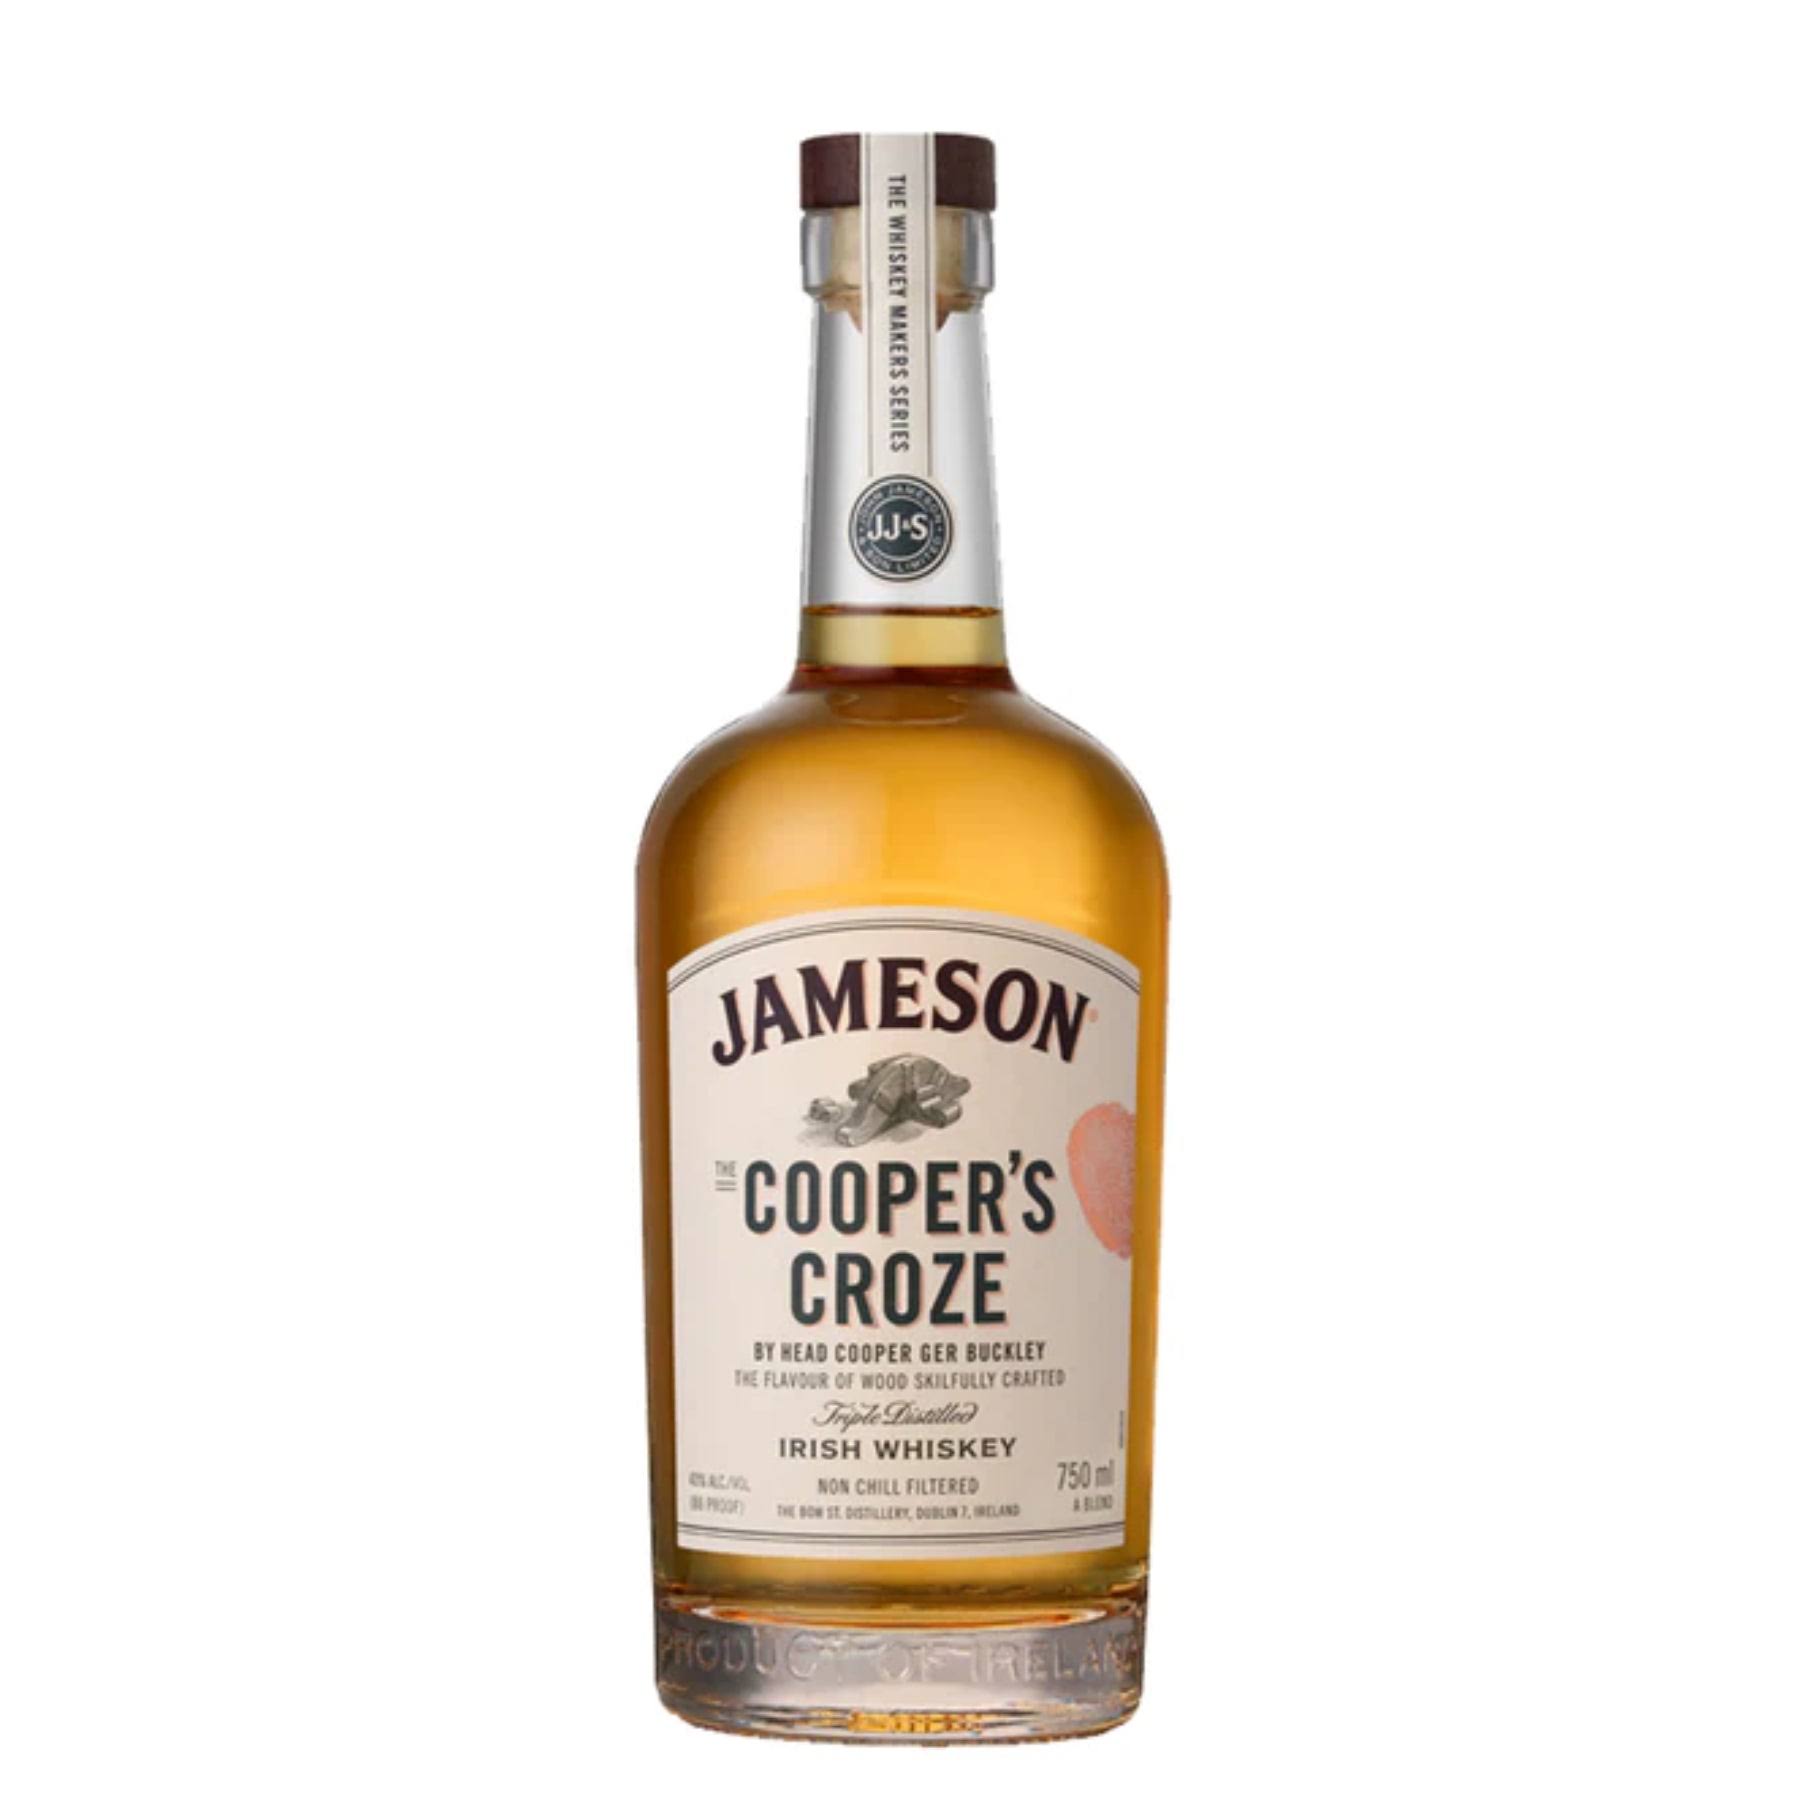 Jameson Coopers Croze Irish Whiskey - 750ml